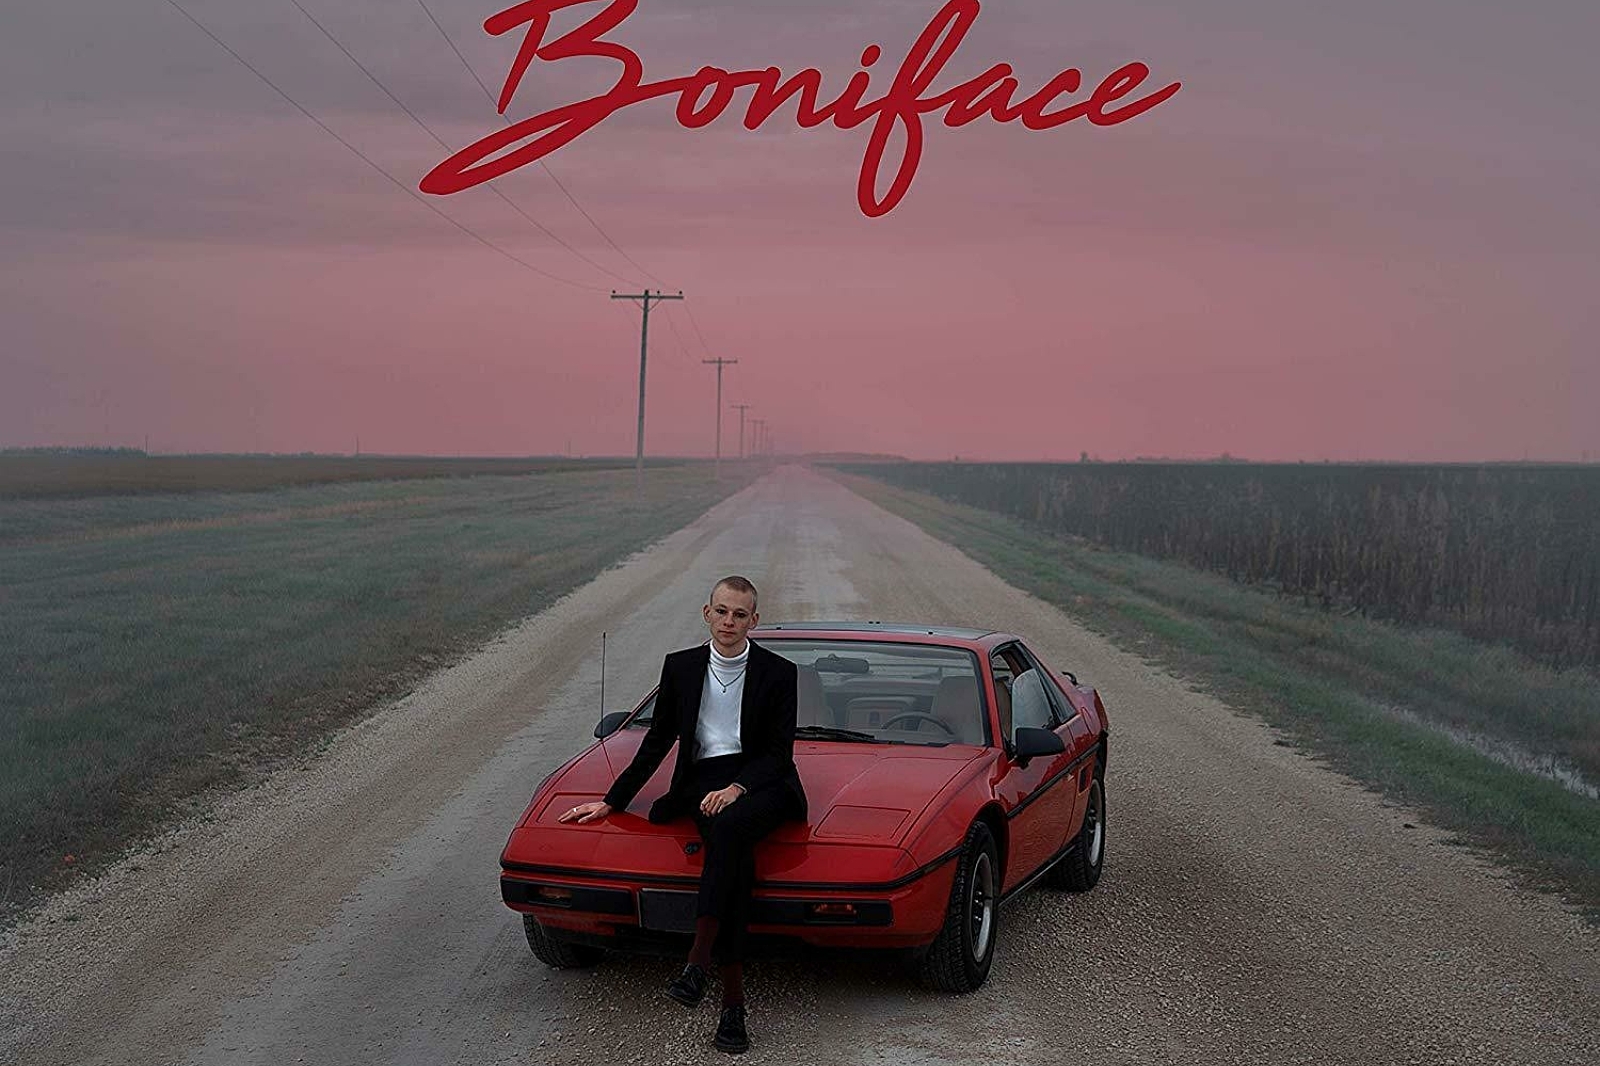 Boniface - Boniface